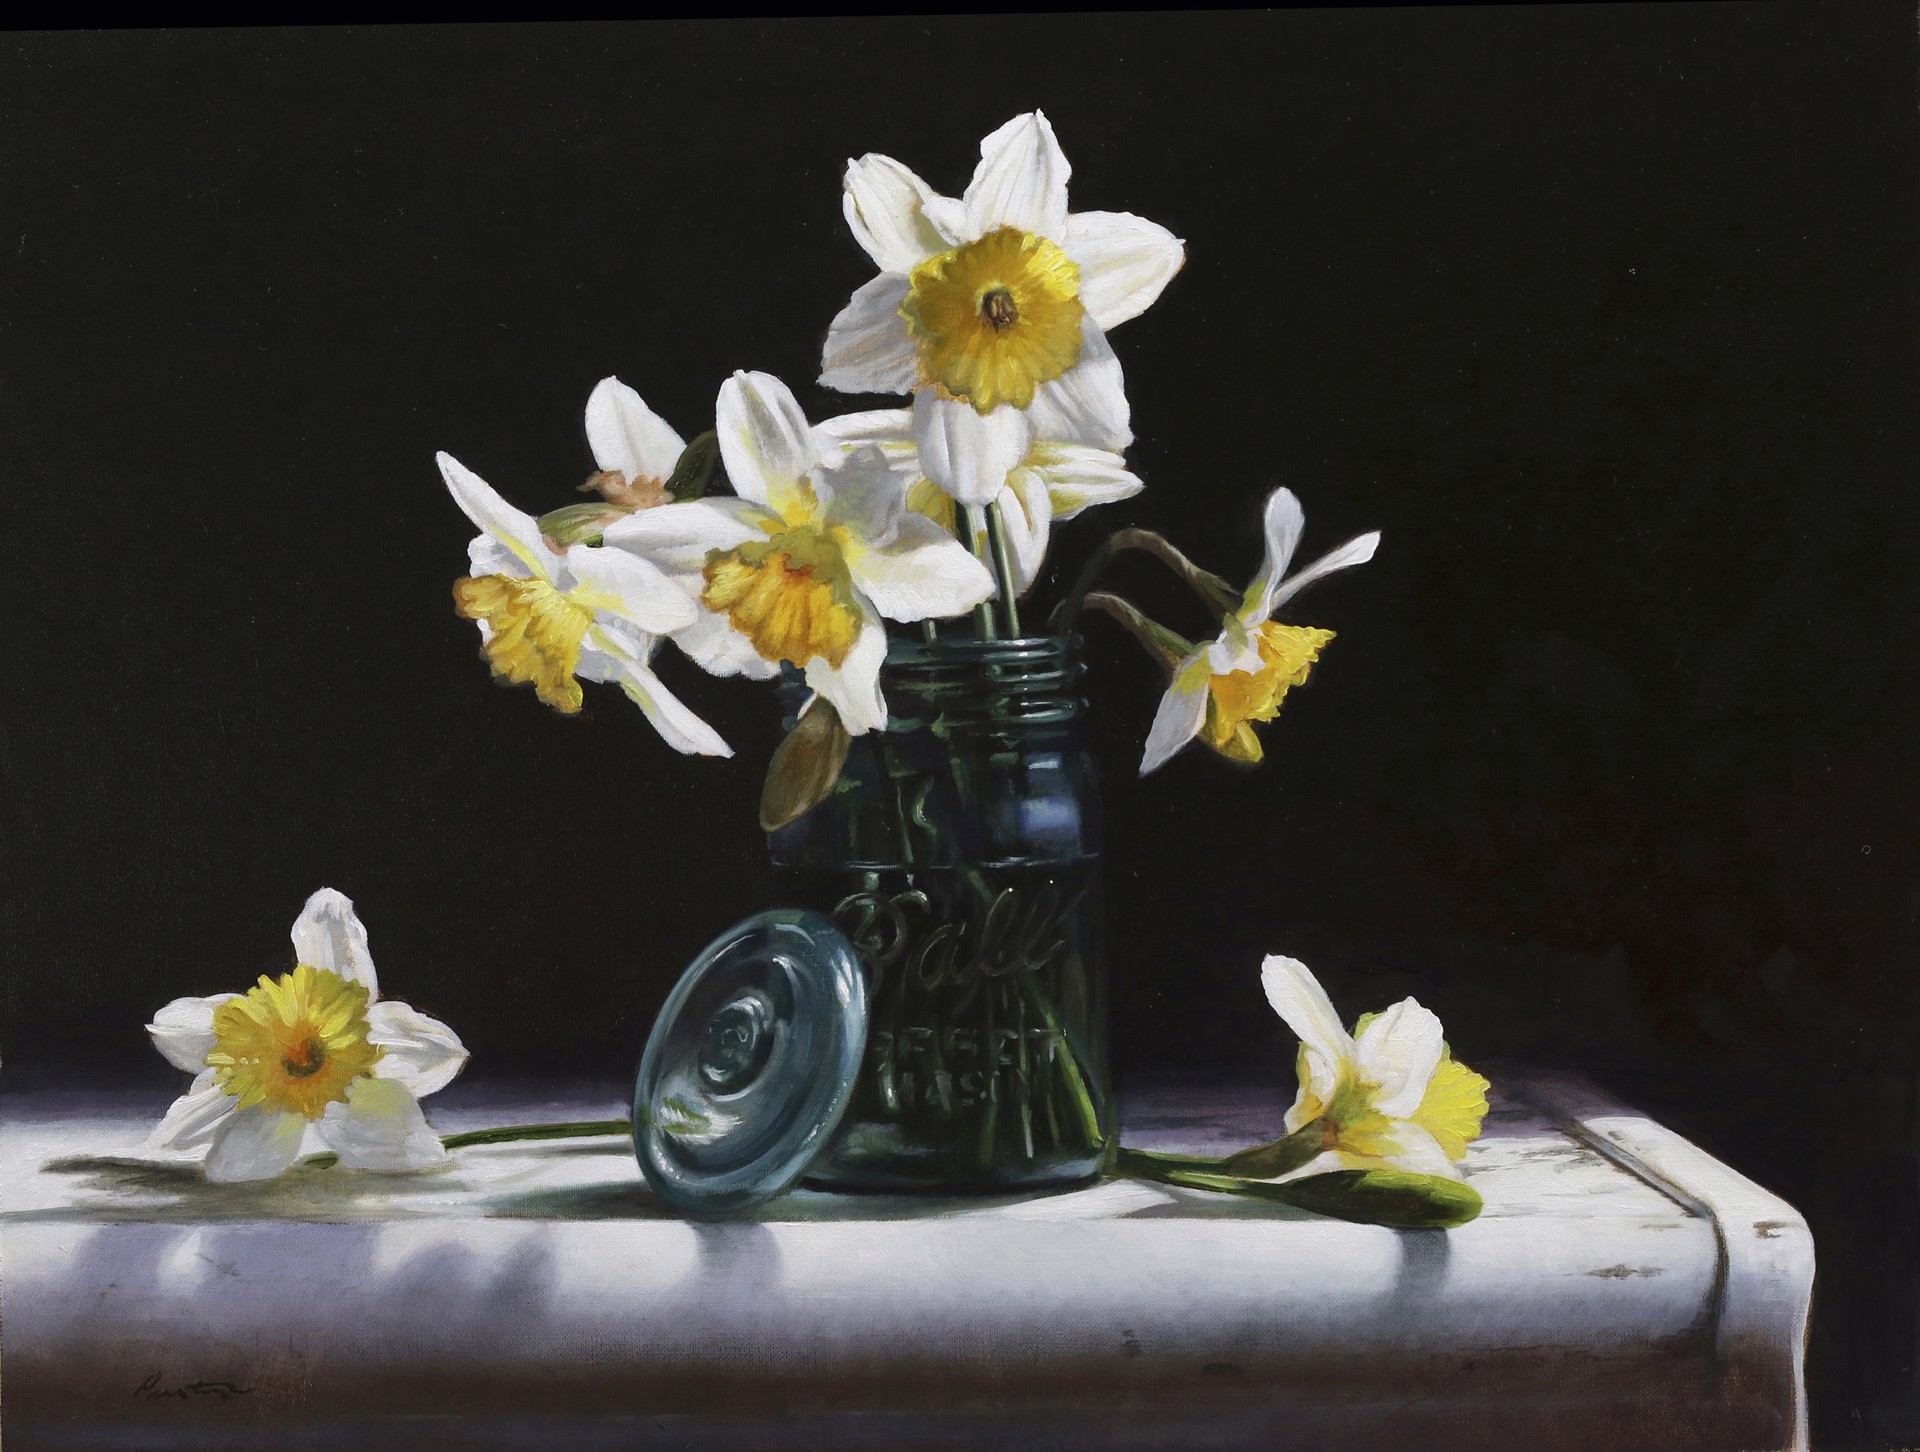 Ball Jar with Daffodils by Larry Preston